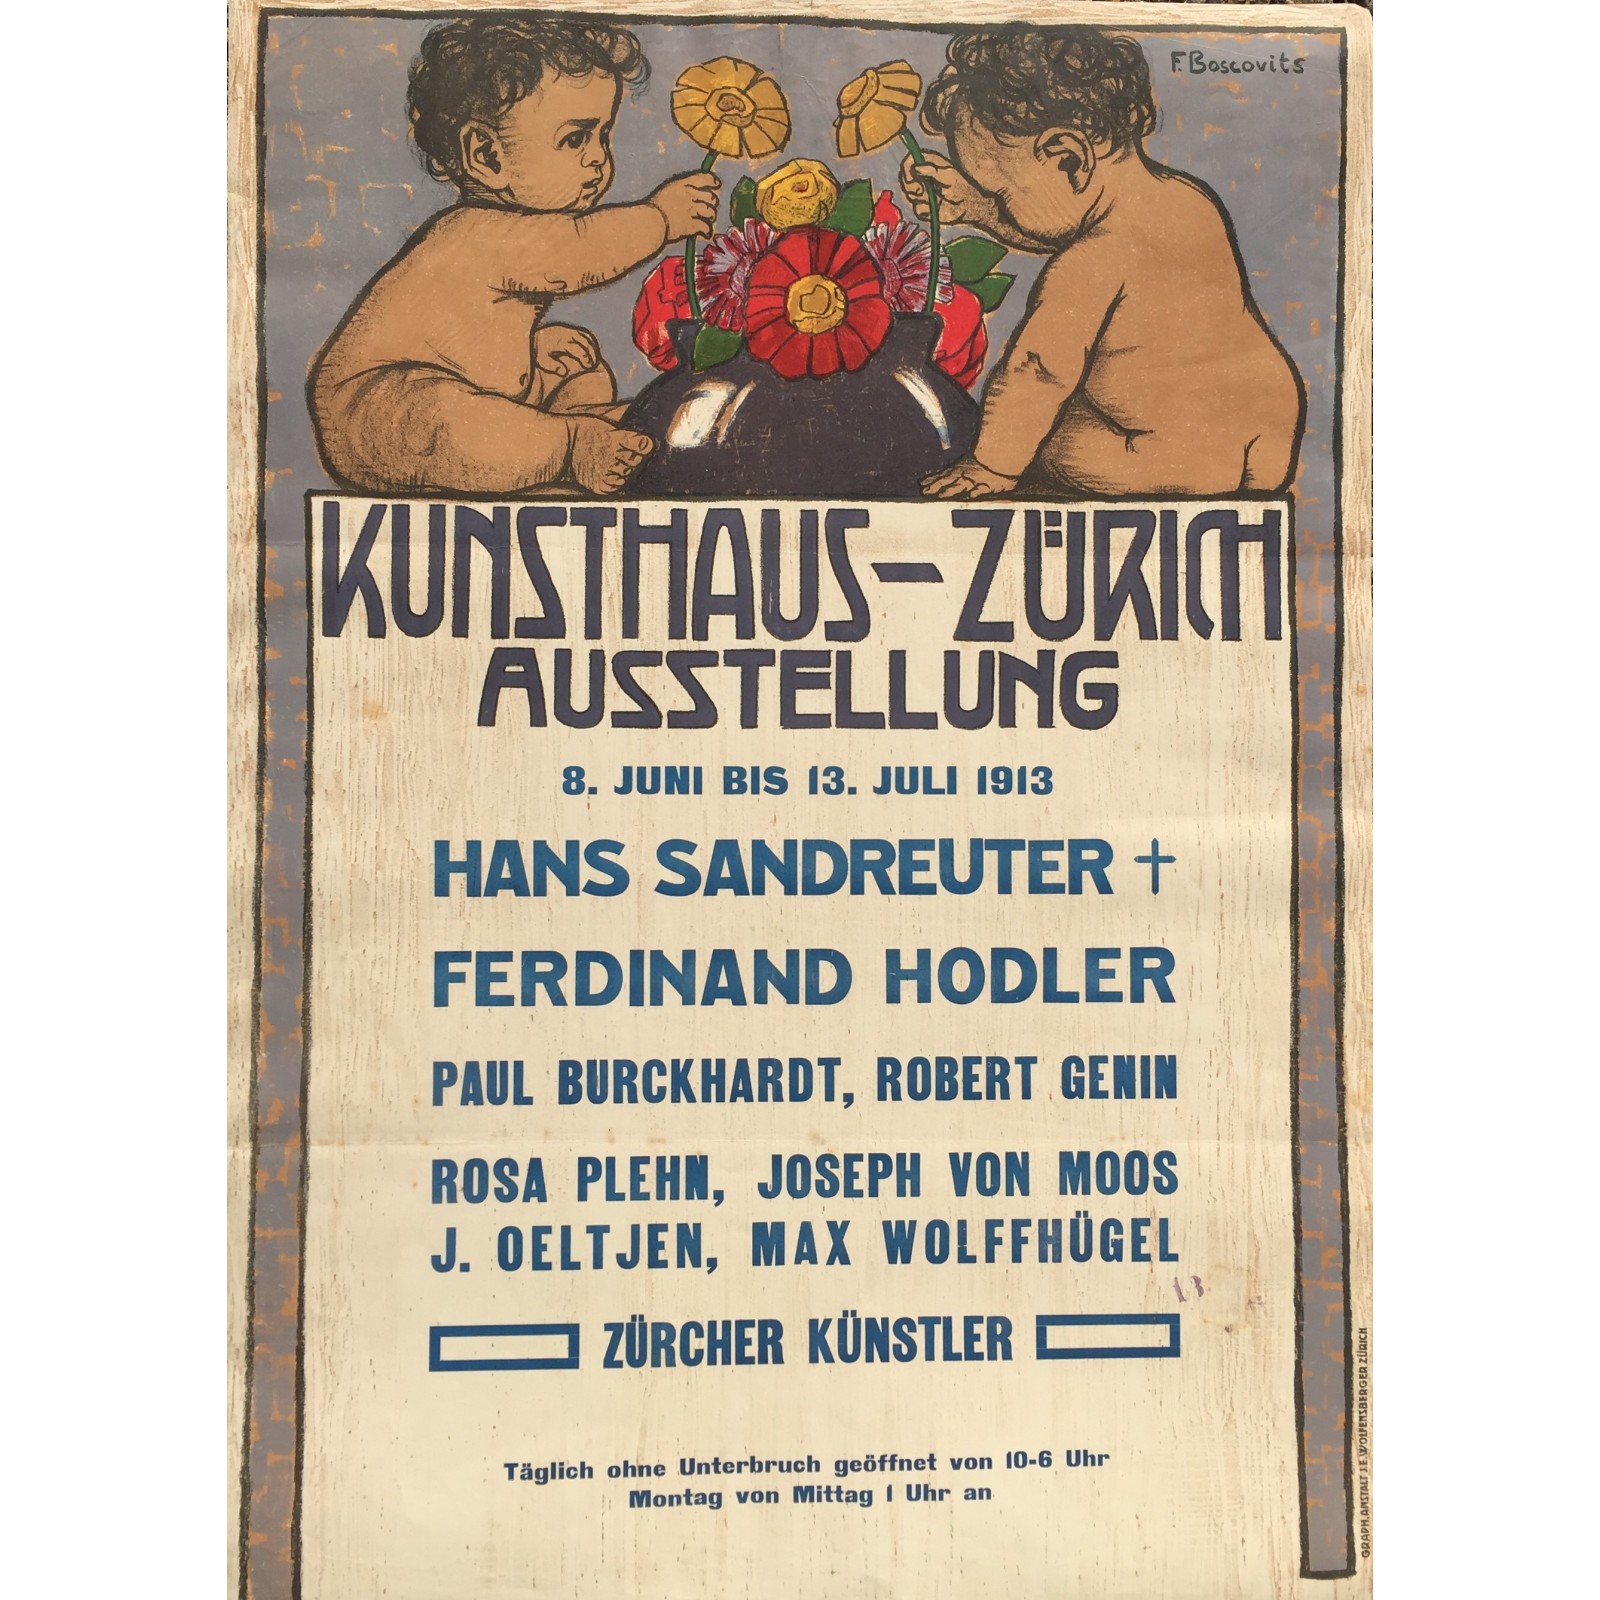 Fritz Boscovitz. Kunsthaus-Zürich We Ausstellung 1913. - Posters Hodler. Sandreuter, Love